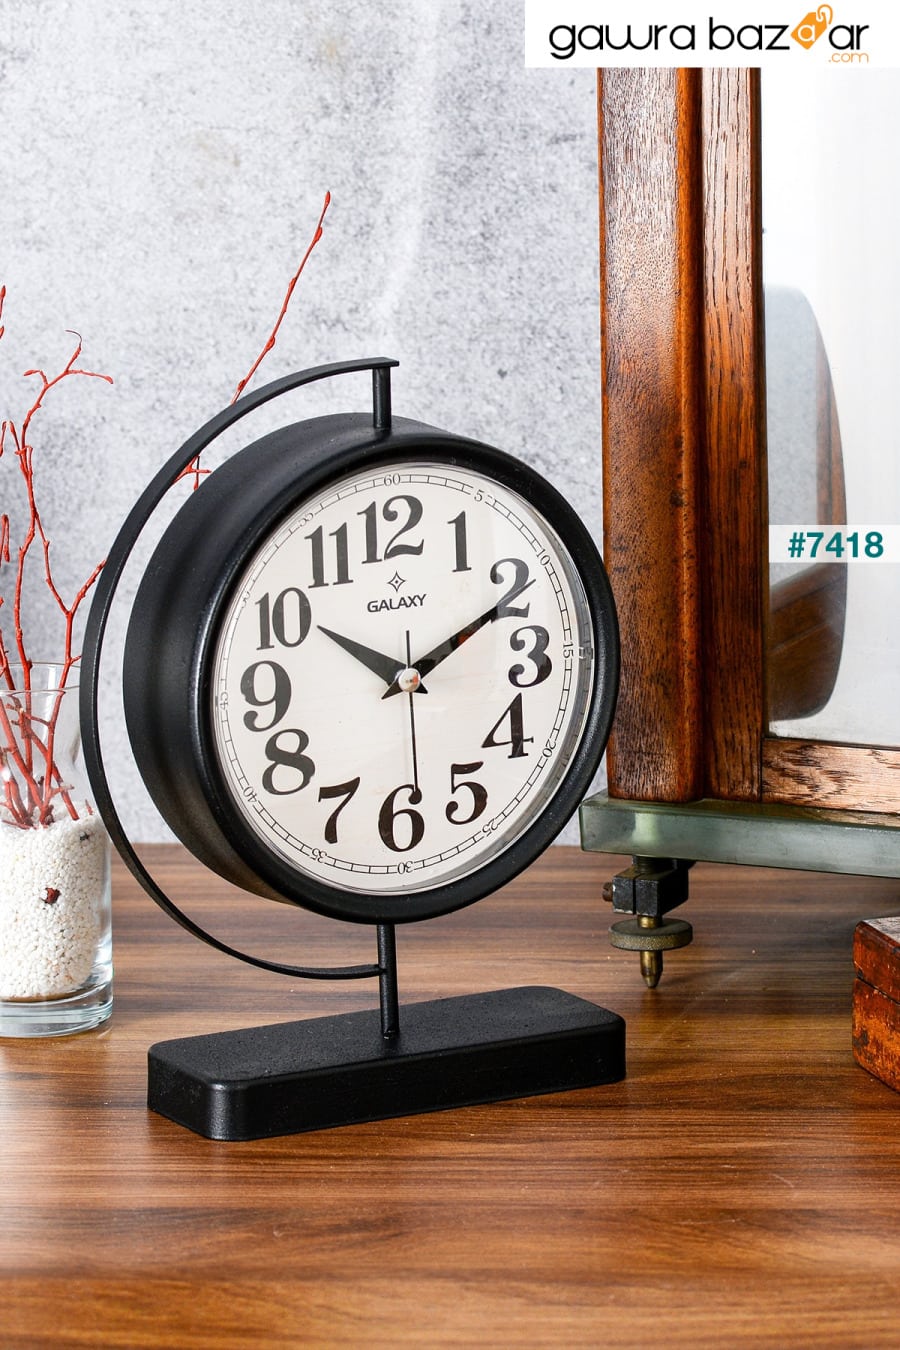 Muyika Maniera ساعة مكتب معدنية مزخرفة آلية صامتة أسود mms Muyika Design 0